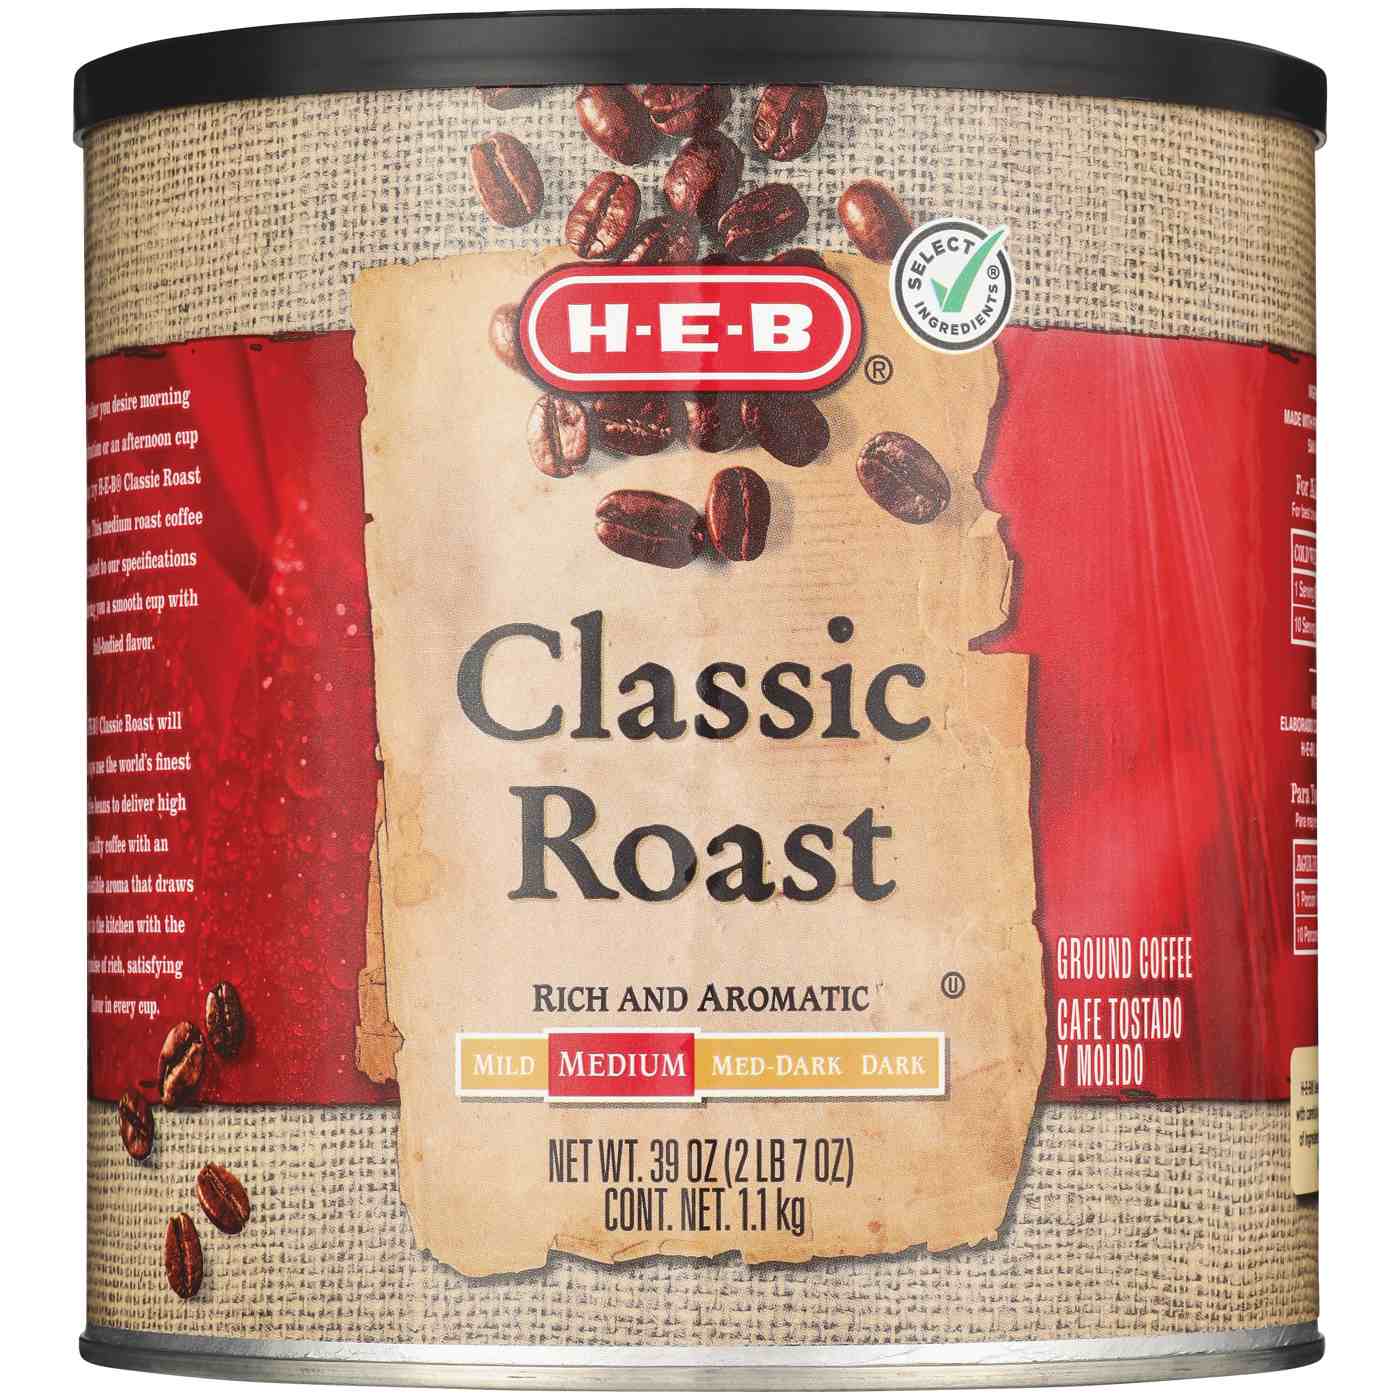 H-E-B Classic Roast Medium Ground Coffee; image 1 of 2